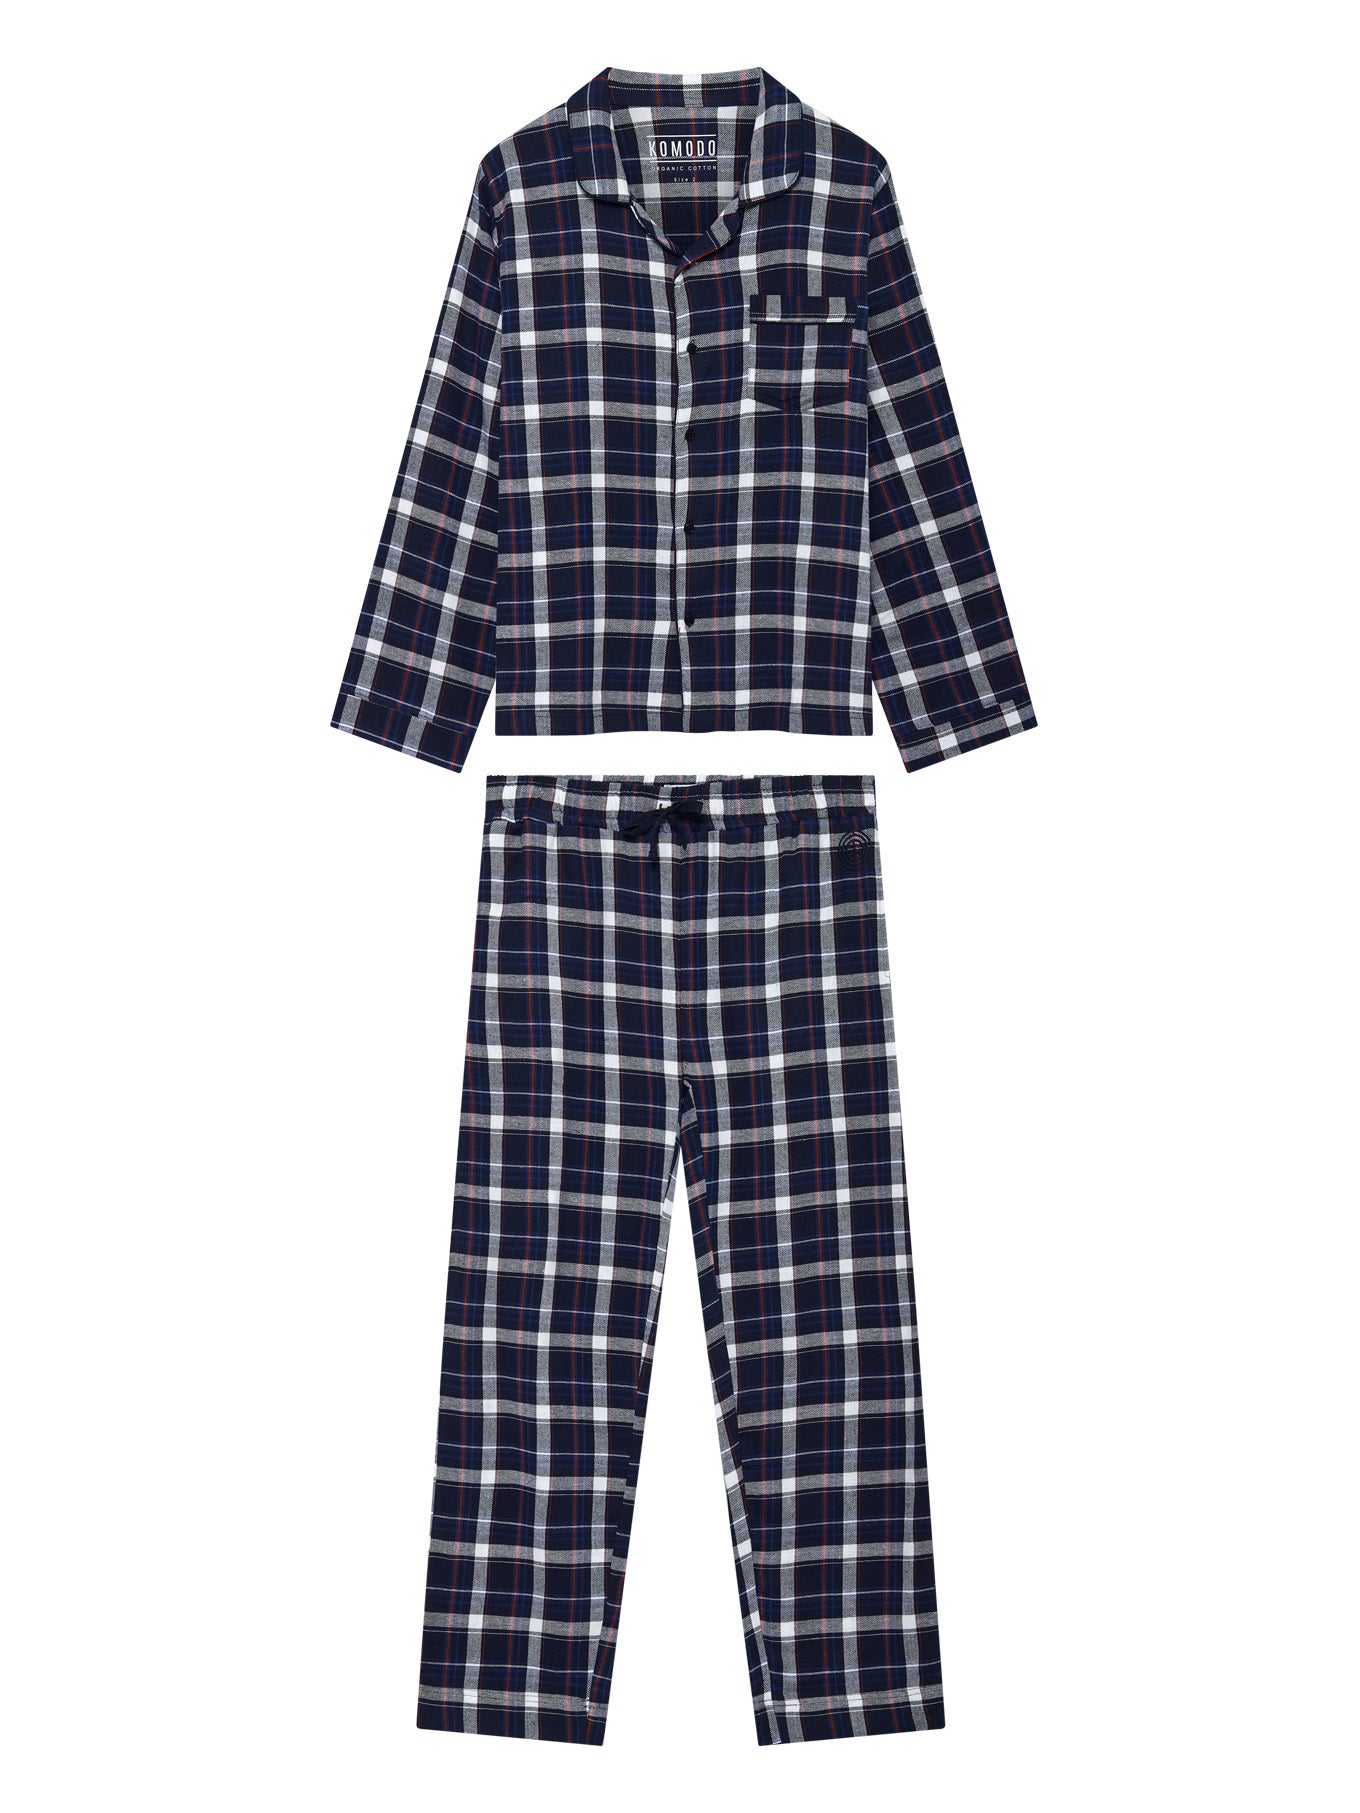 JIM JAM - Mens Organic Cotton Pyjama Set Dark Navy